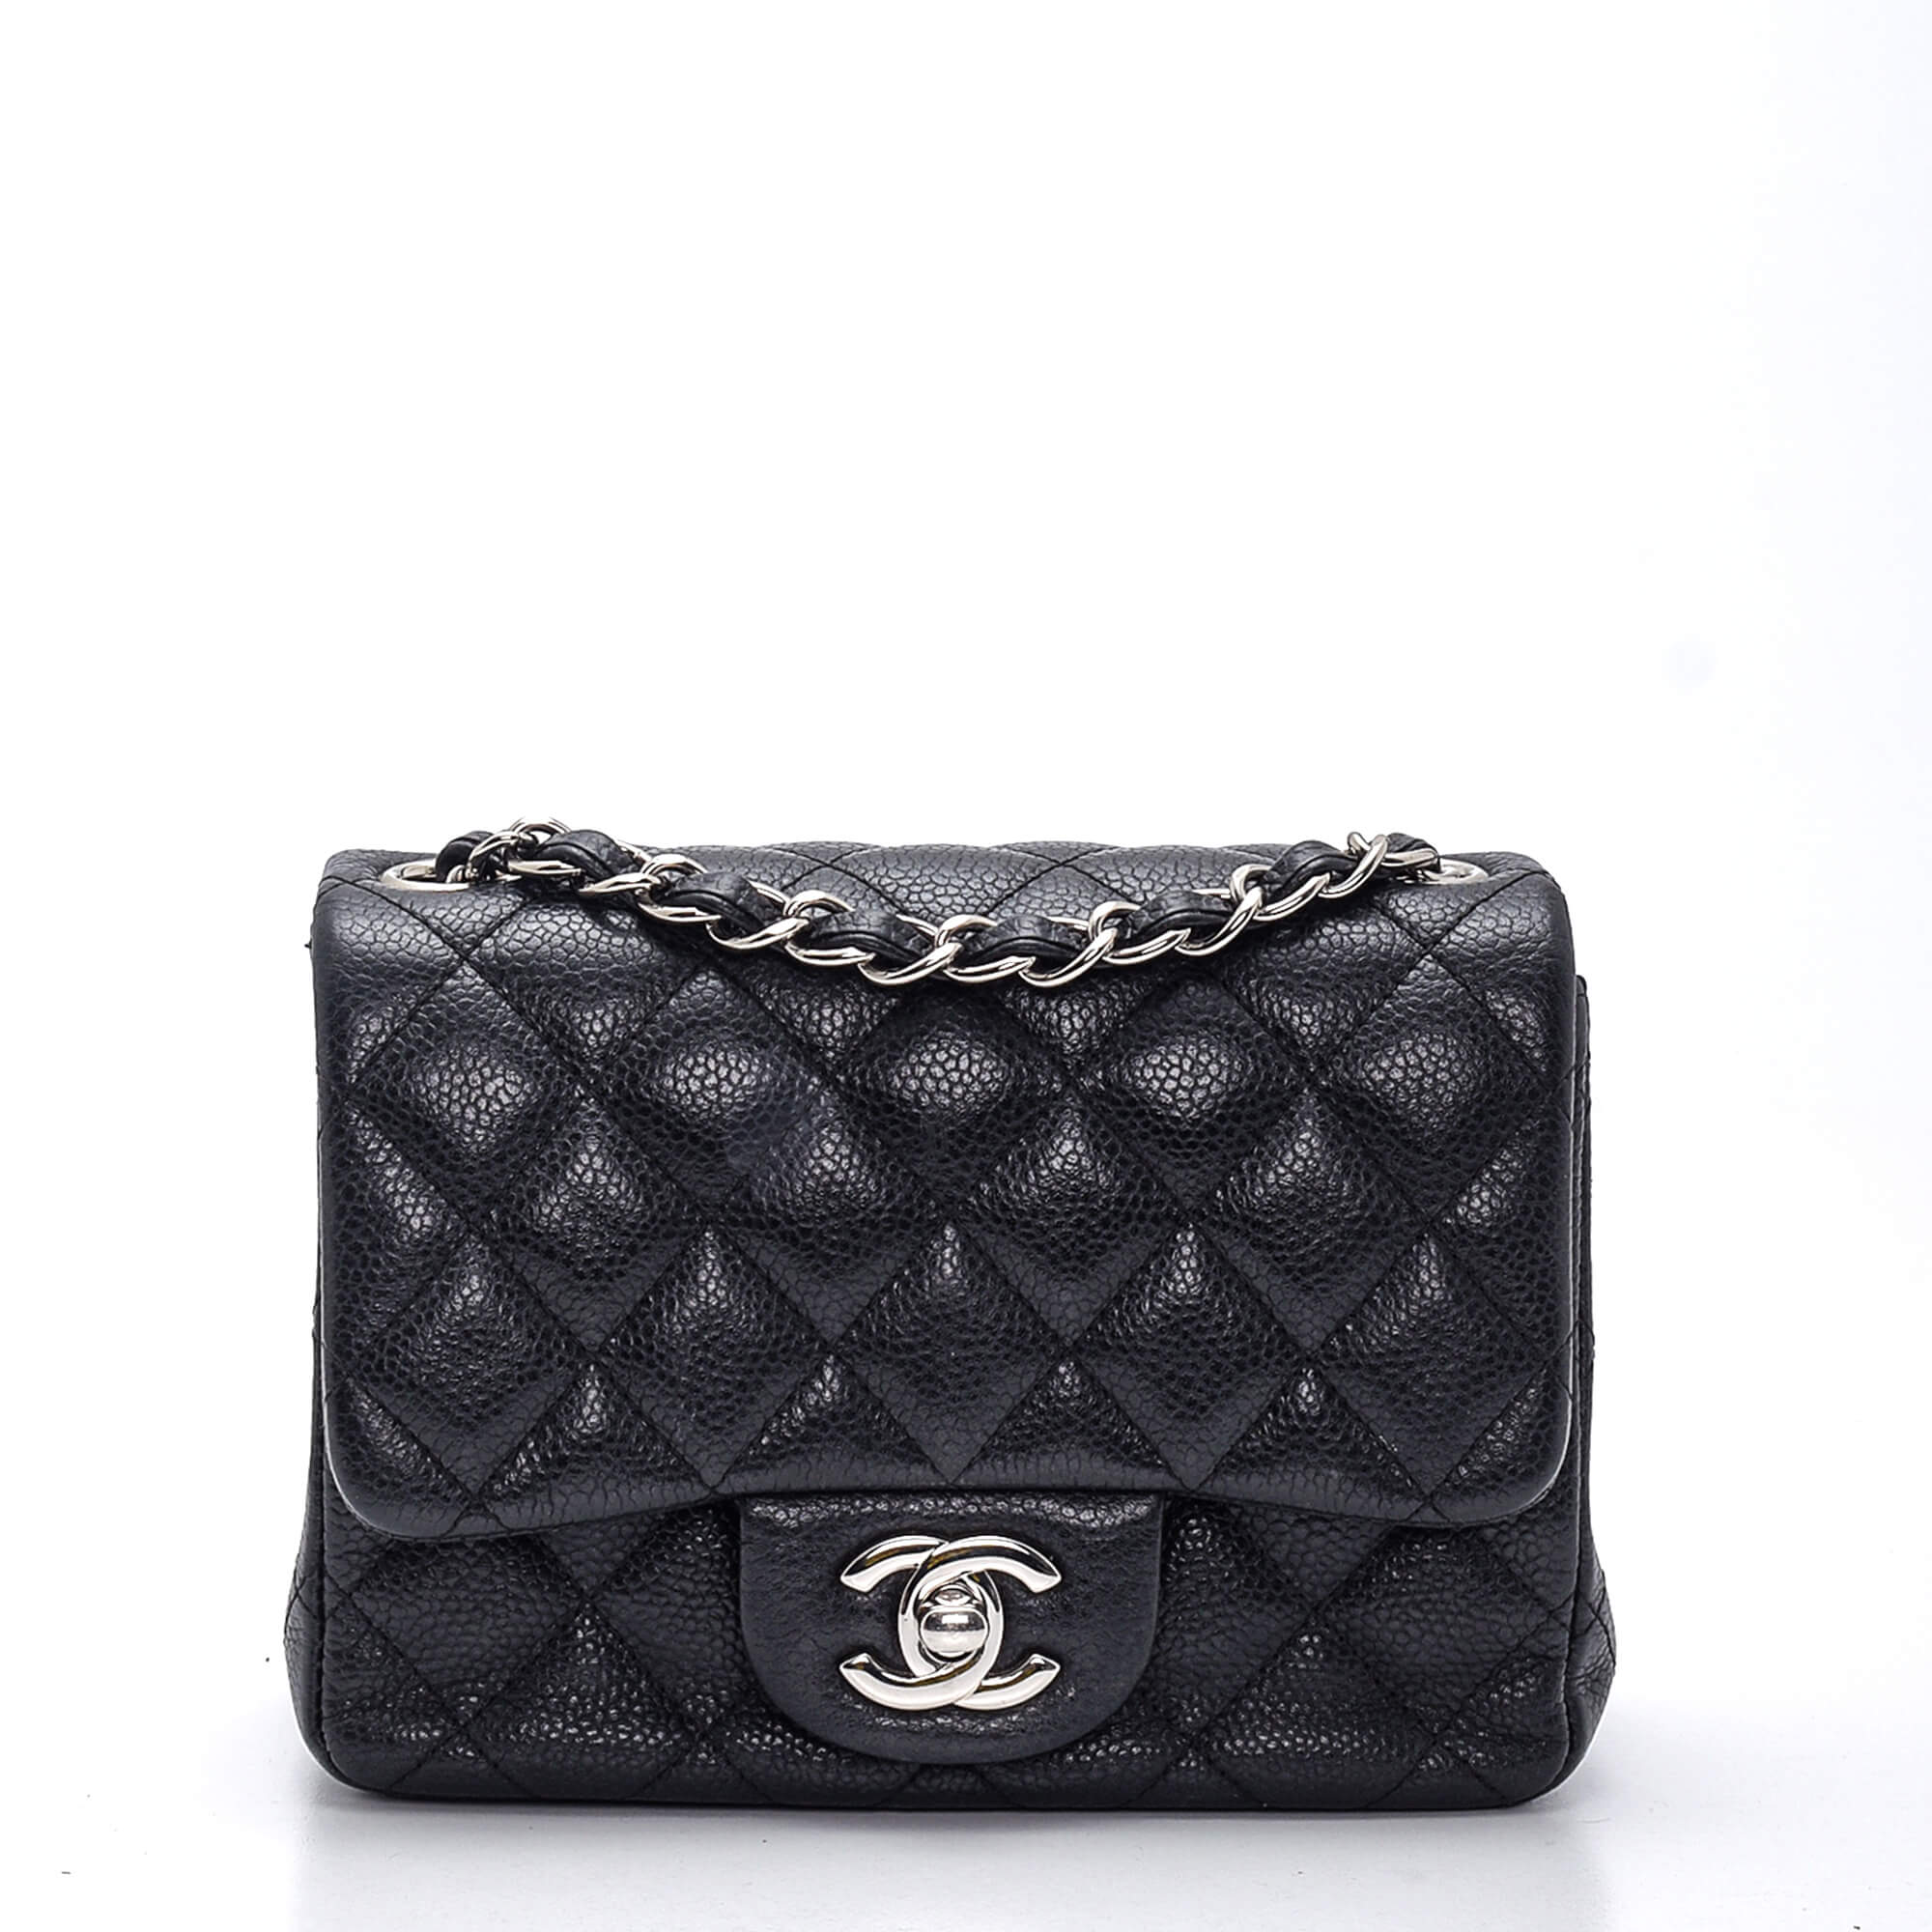 Chanel - Black Caviar Leather Square Mini Flap Bag